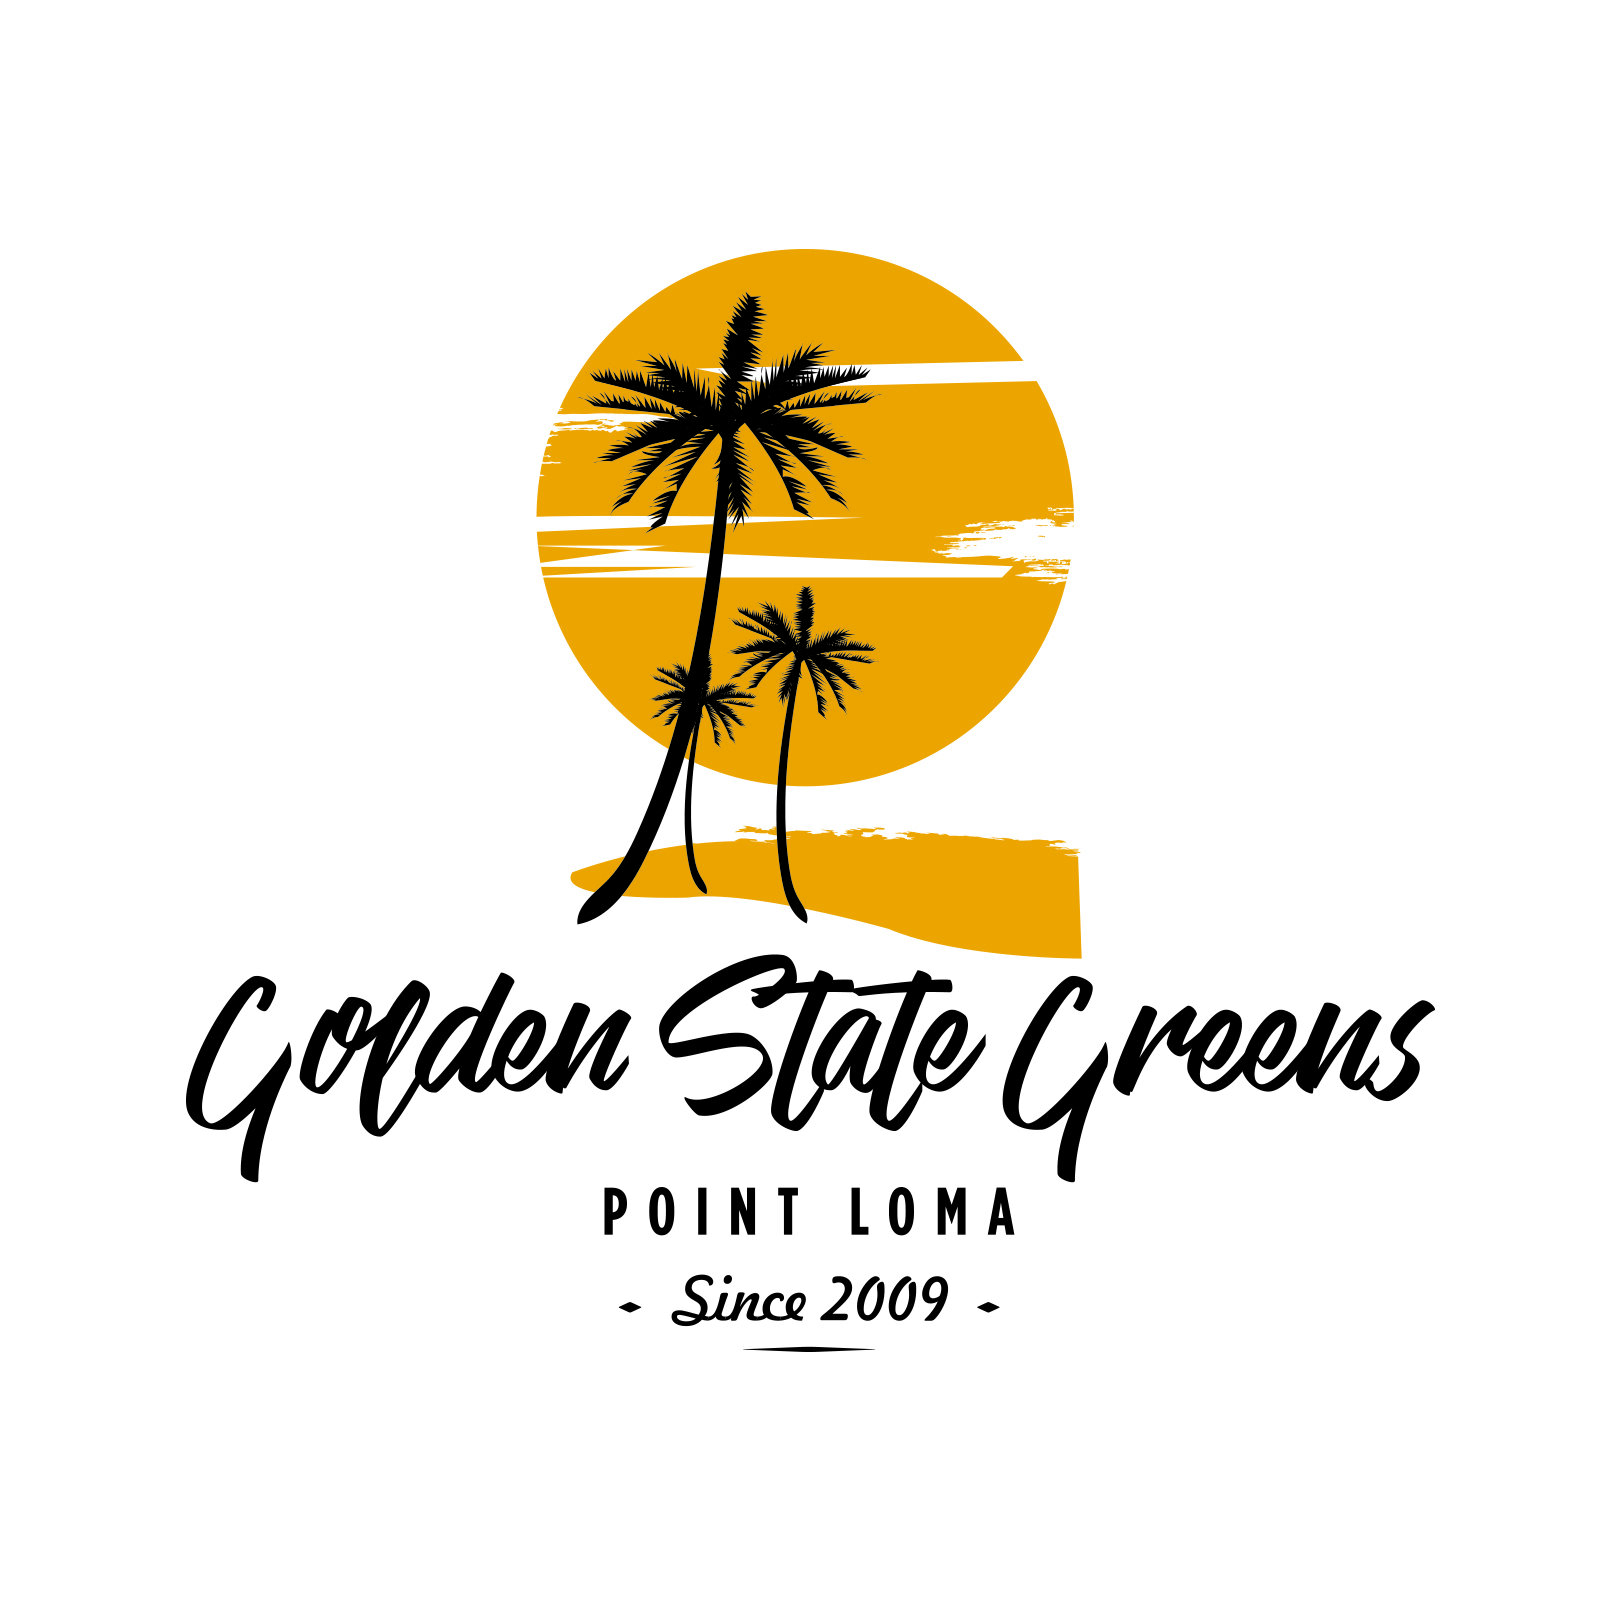 GoldenStateGreens_cannabis_logo.jpg